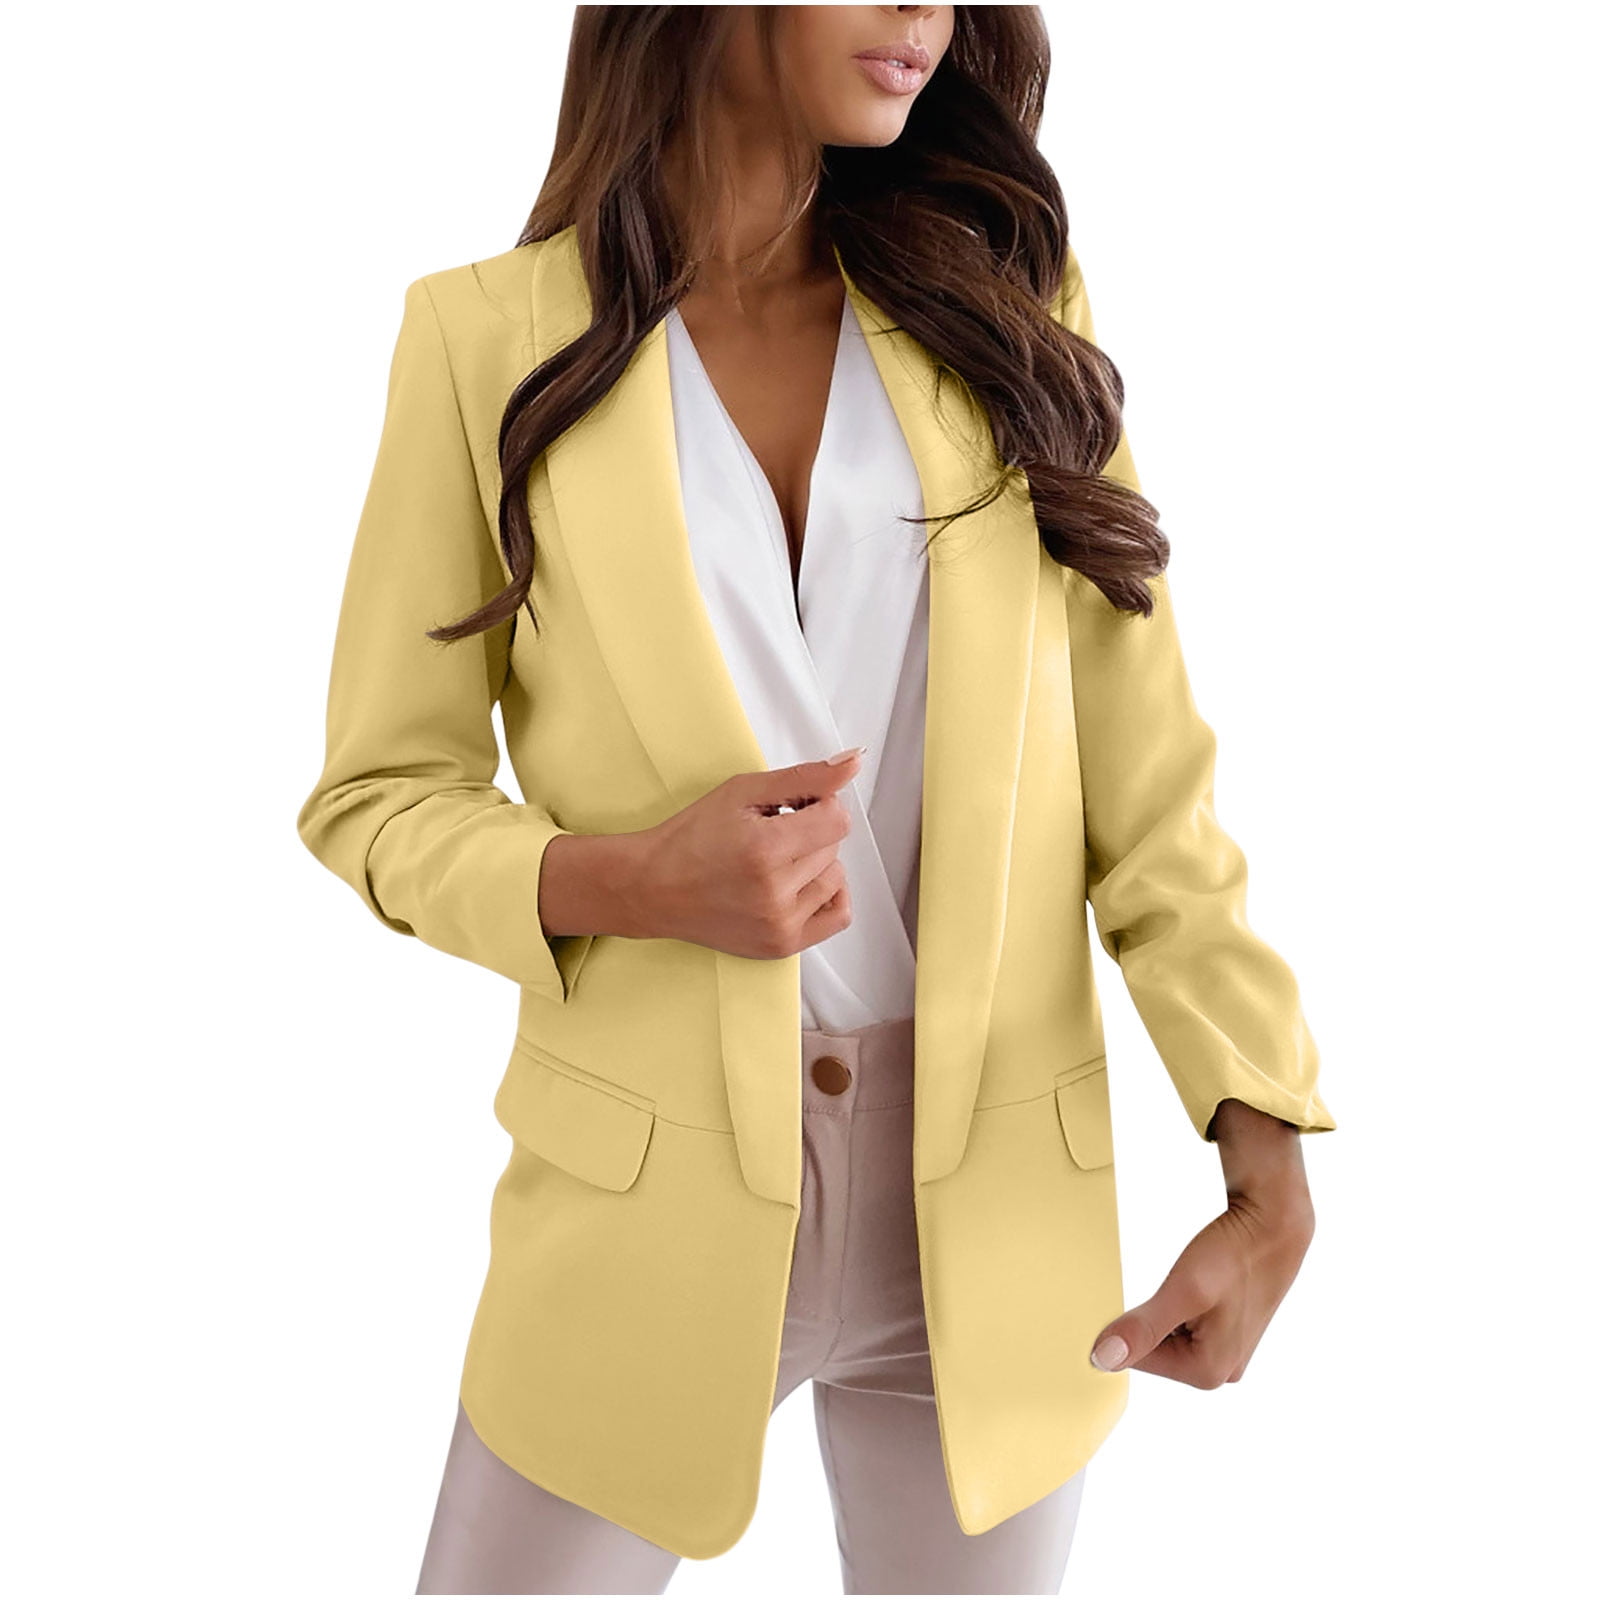 Tailor Made Sparkle Threads Tweed Light Beige Jacket Coat Blazer + Skirt /  Shorts/ Trousers Suit